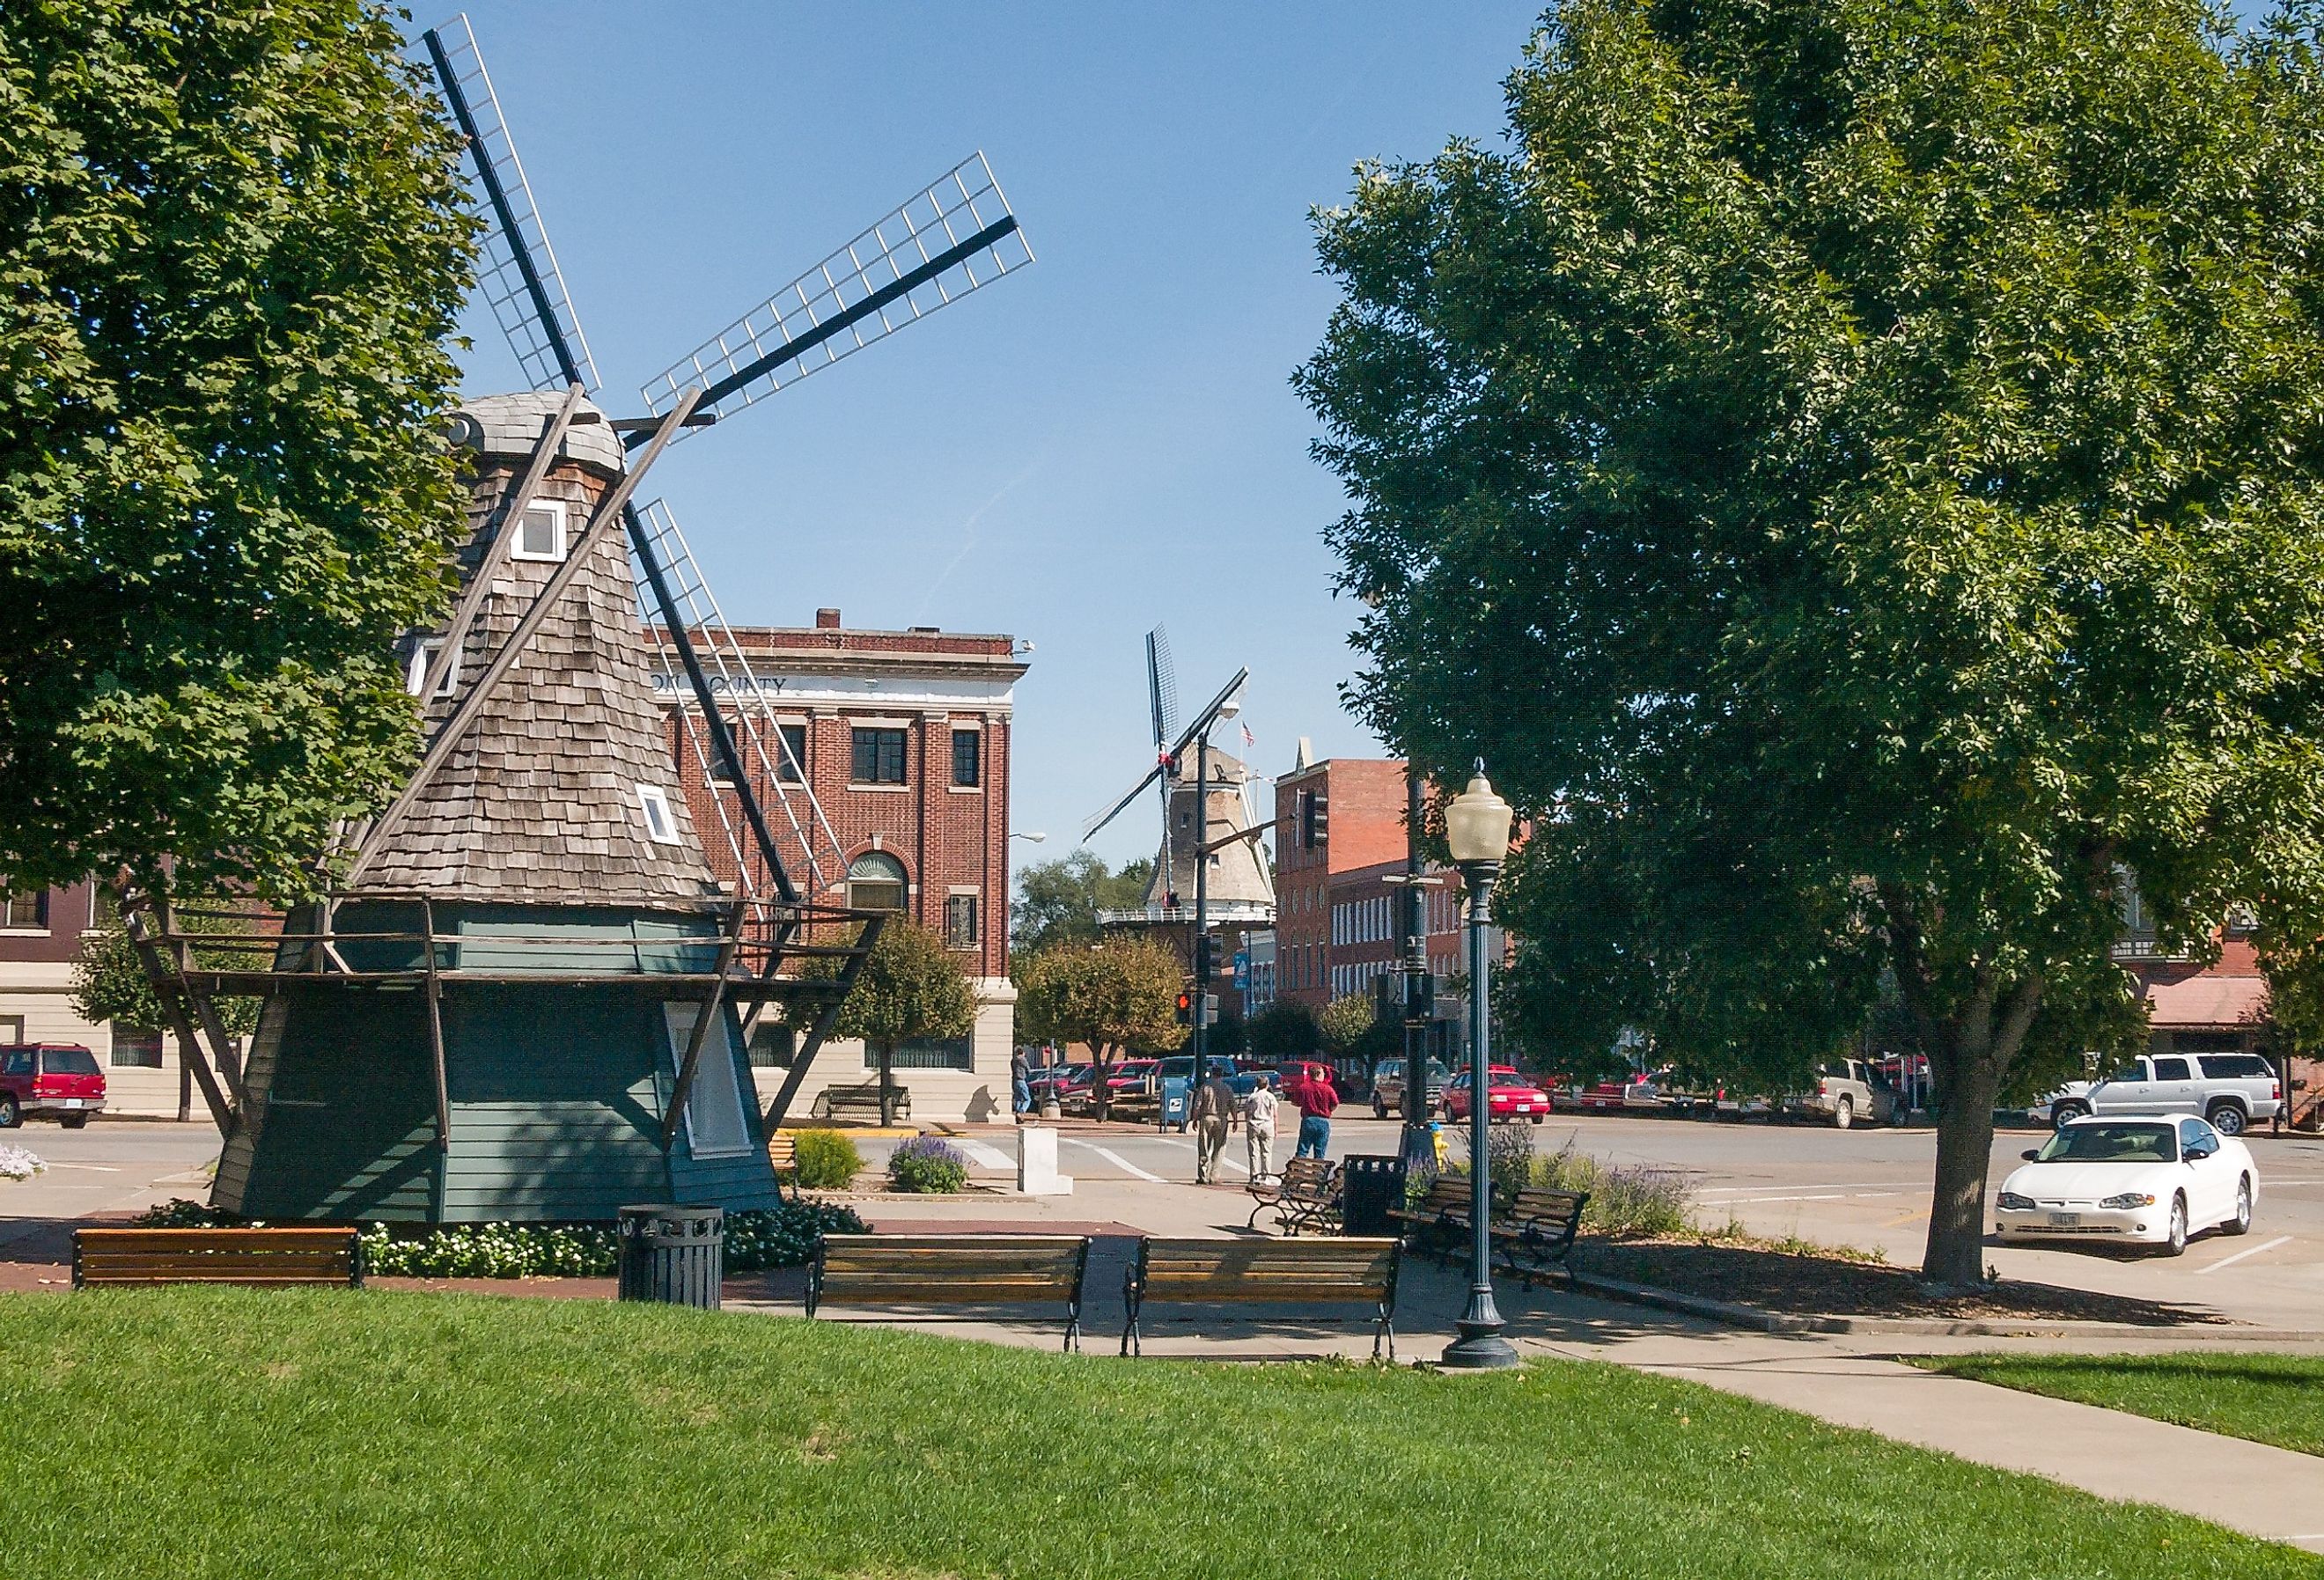 Dutch village and downtown streets in Pella, Iowa.